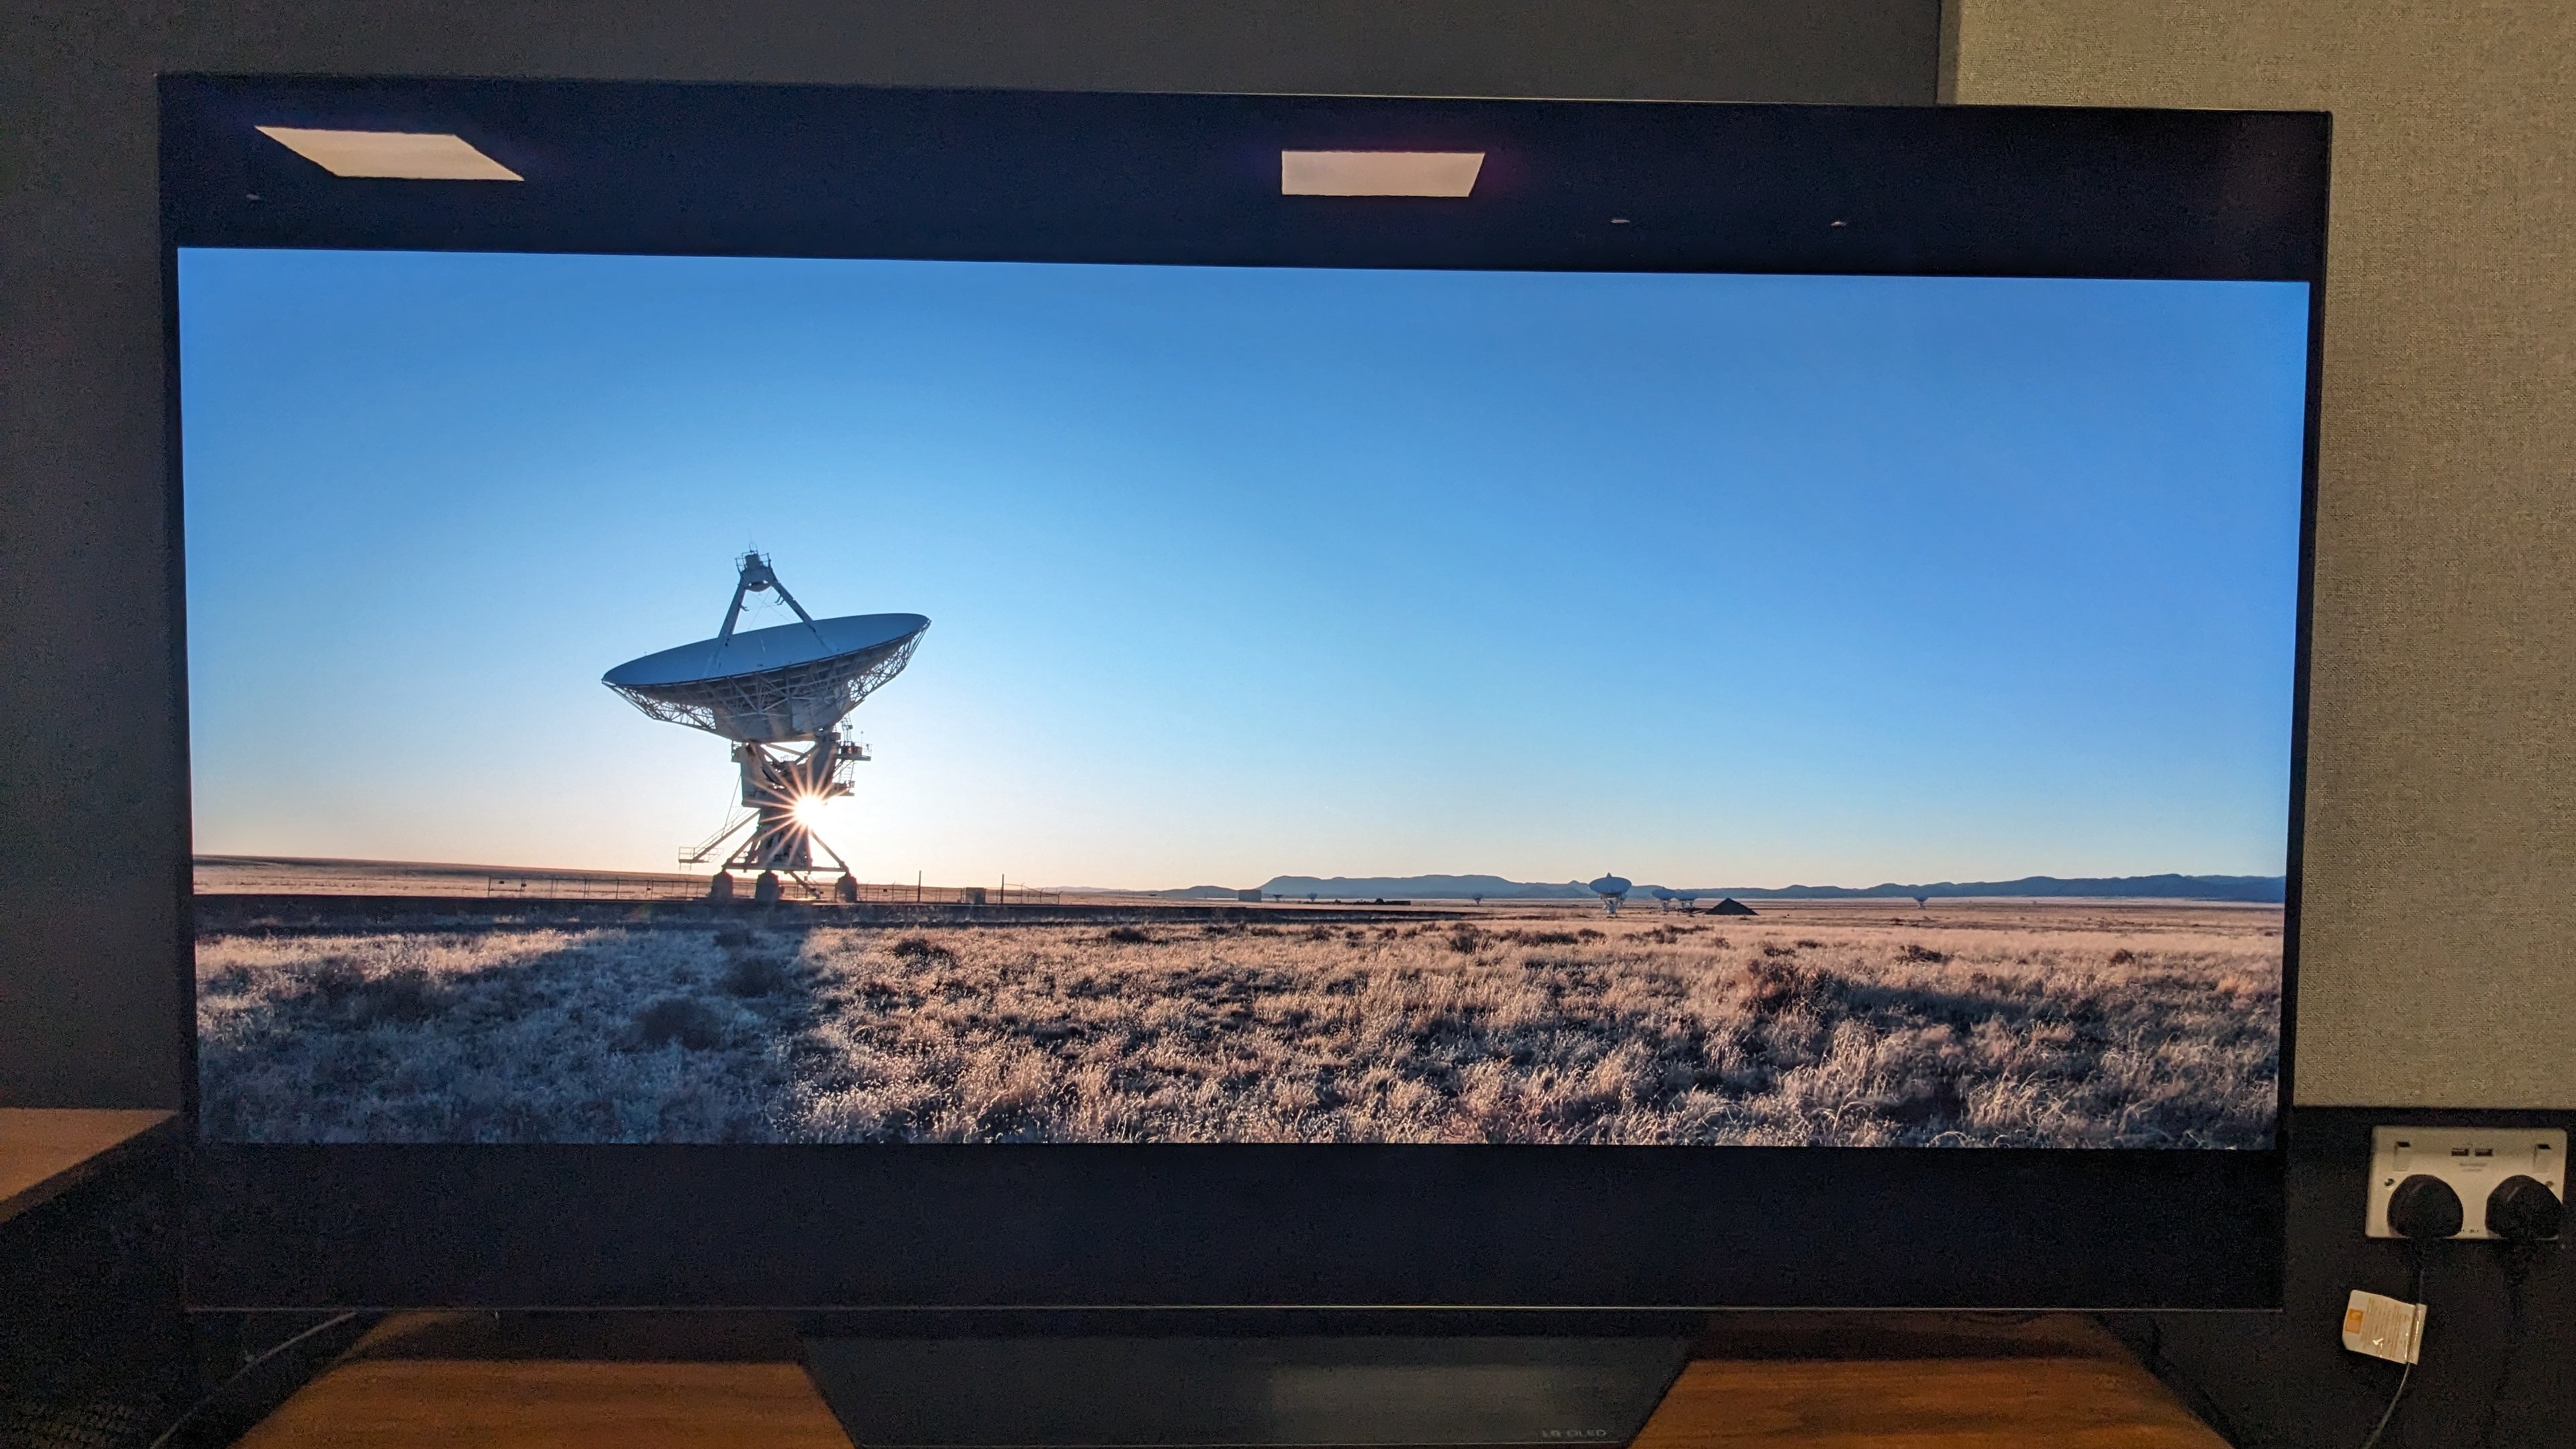 LG B3 OLED TV with satellite dish in desert on screen